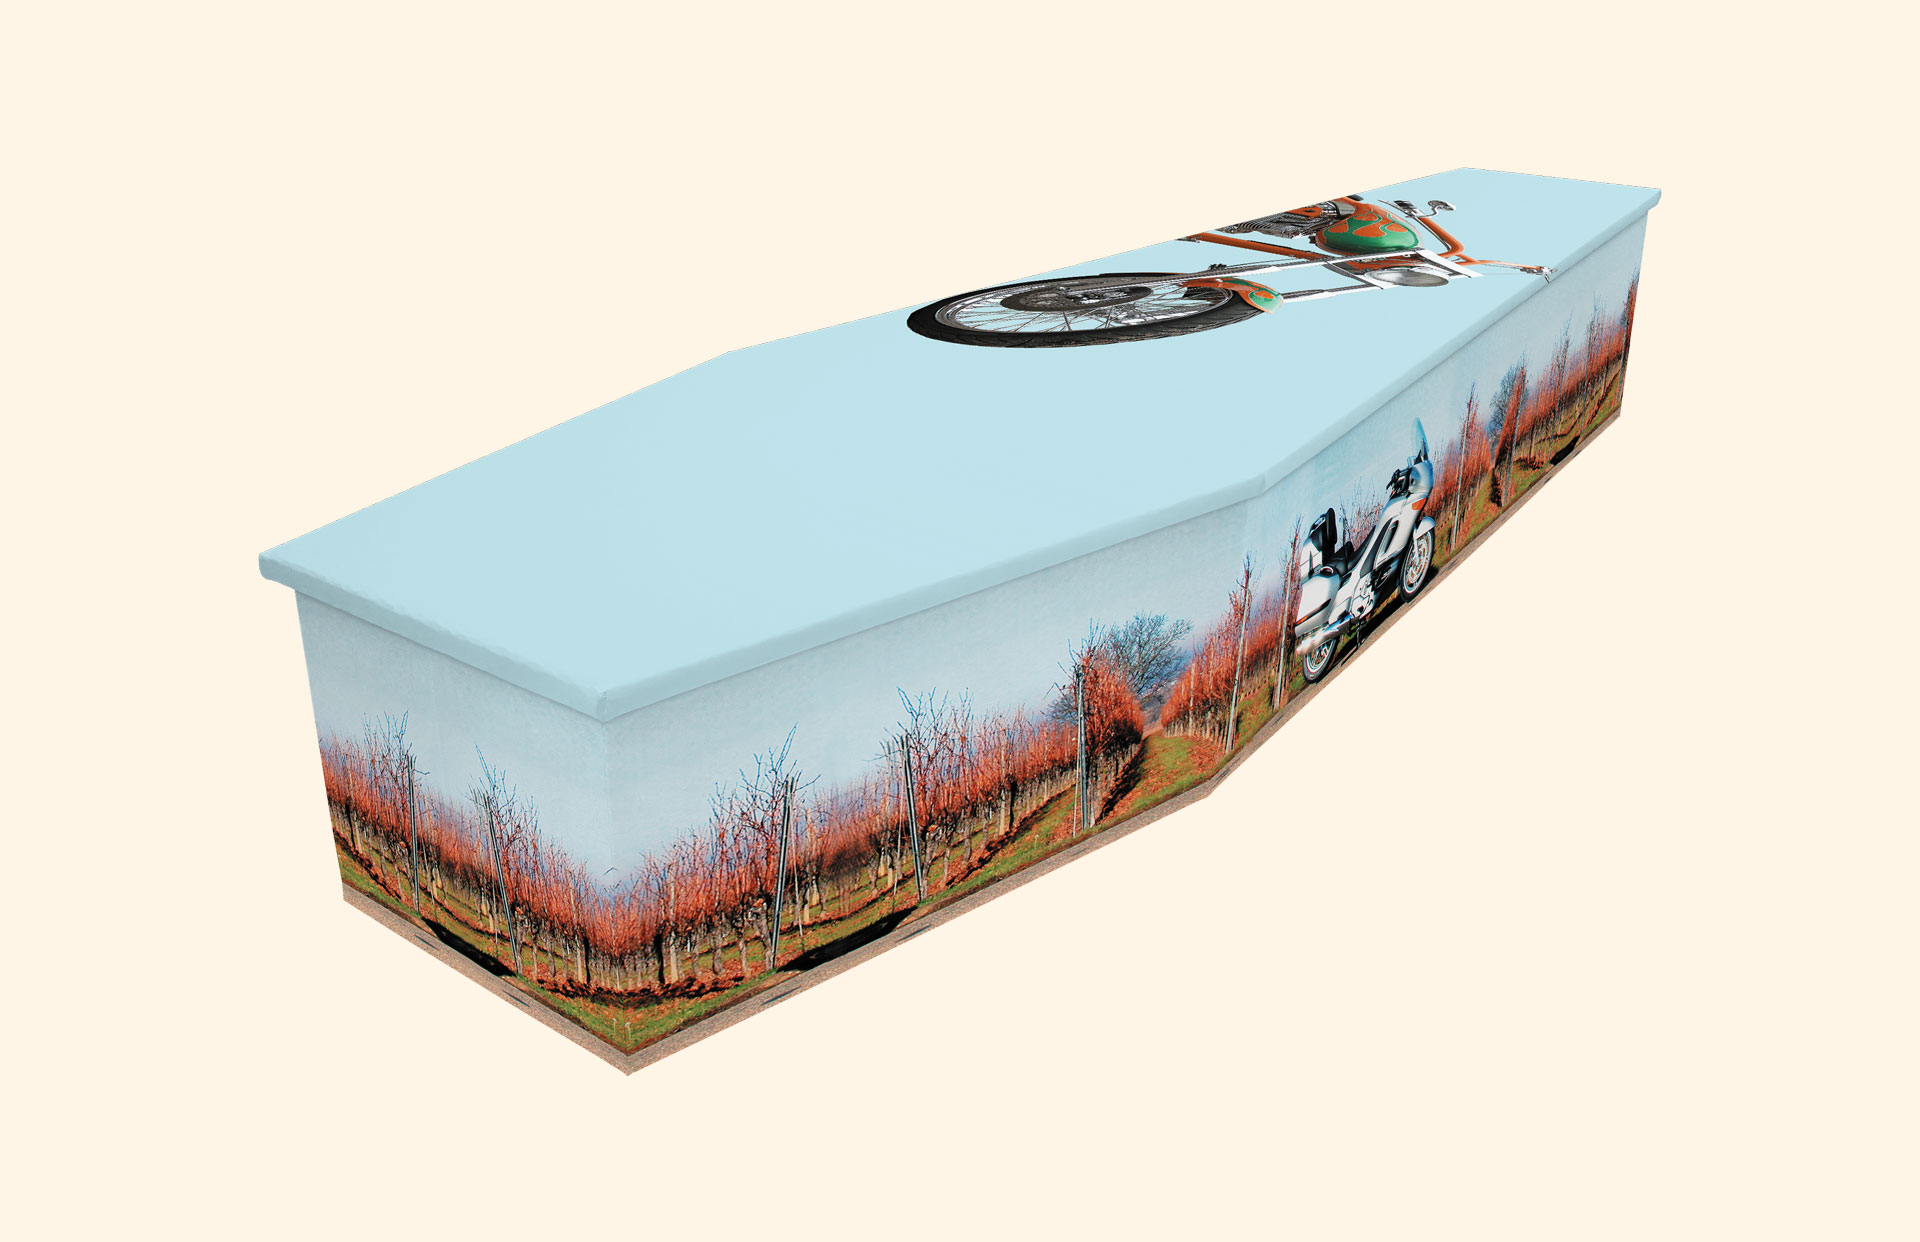 Easy Rider design on a cardboard coffin